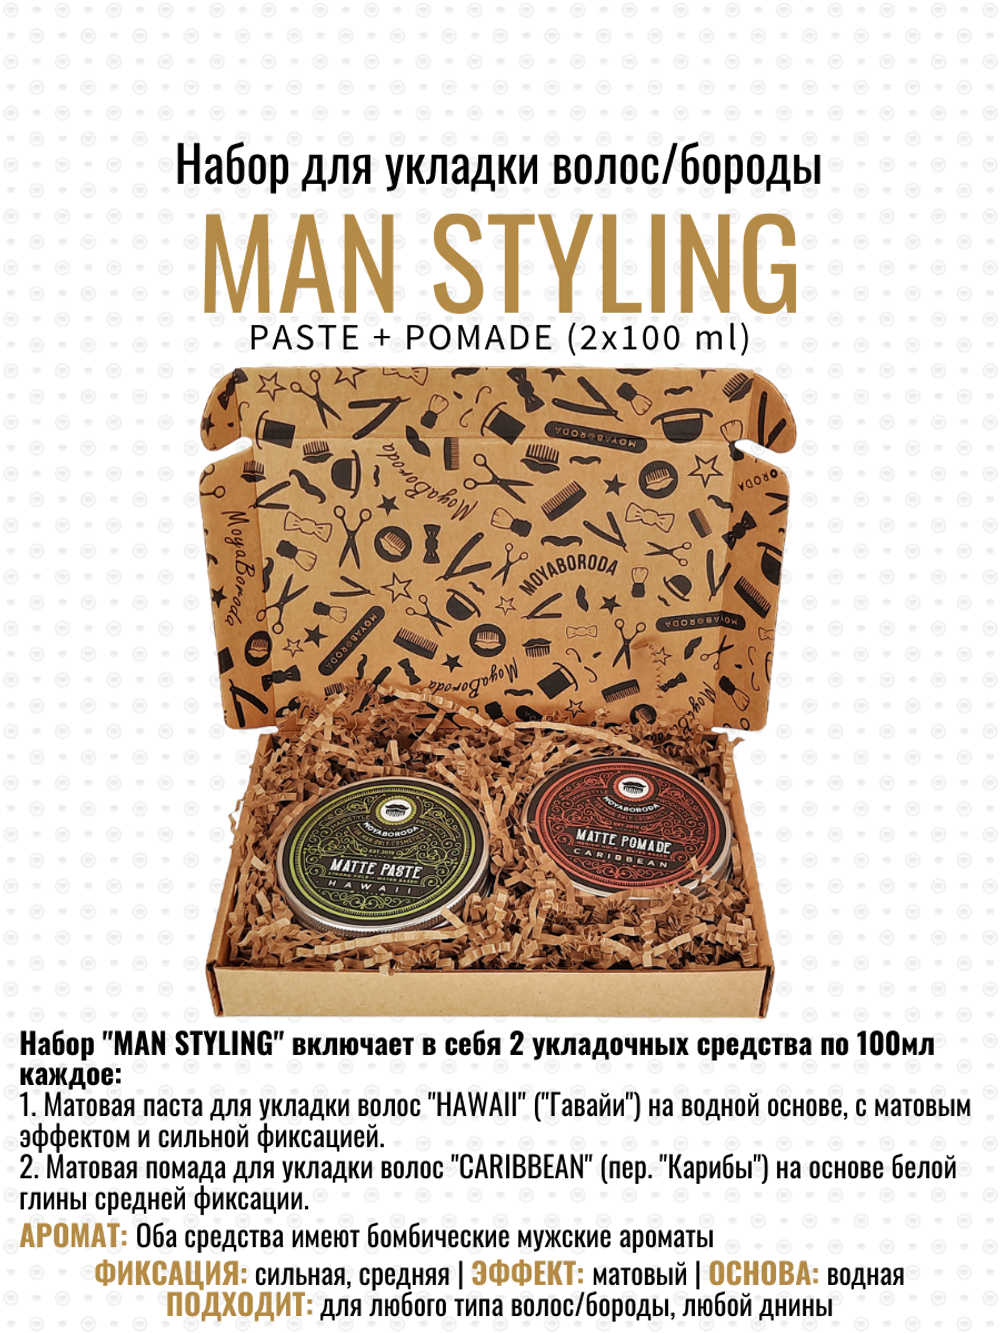 Набор для укладки волос/бороды MOYABORODA "MAN STYLING" (PASTE+POMADE, матовый эффект), 2x100мл